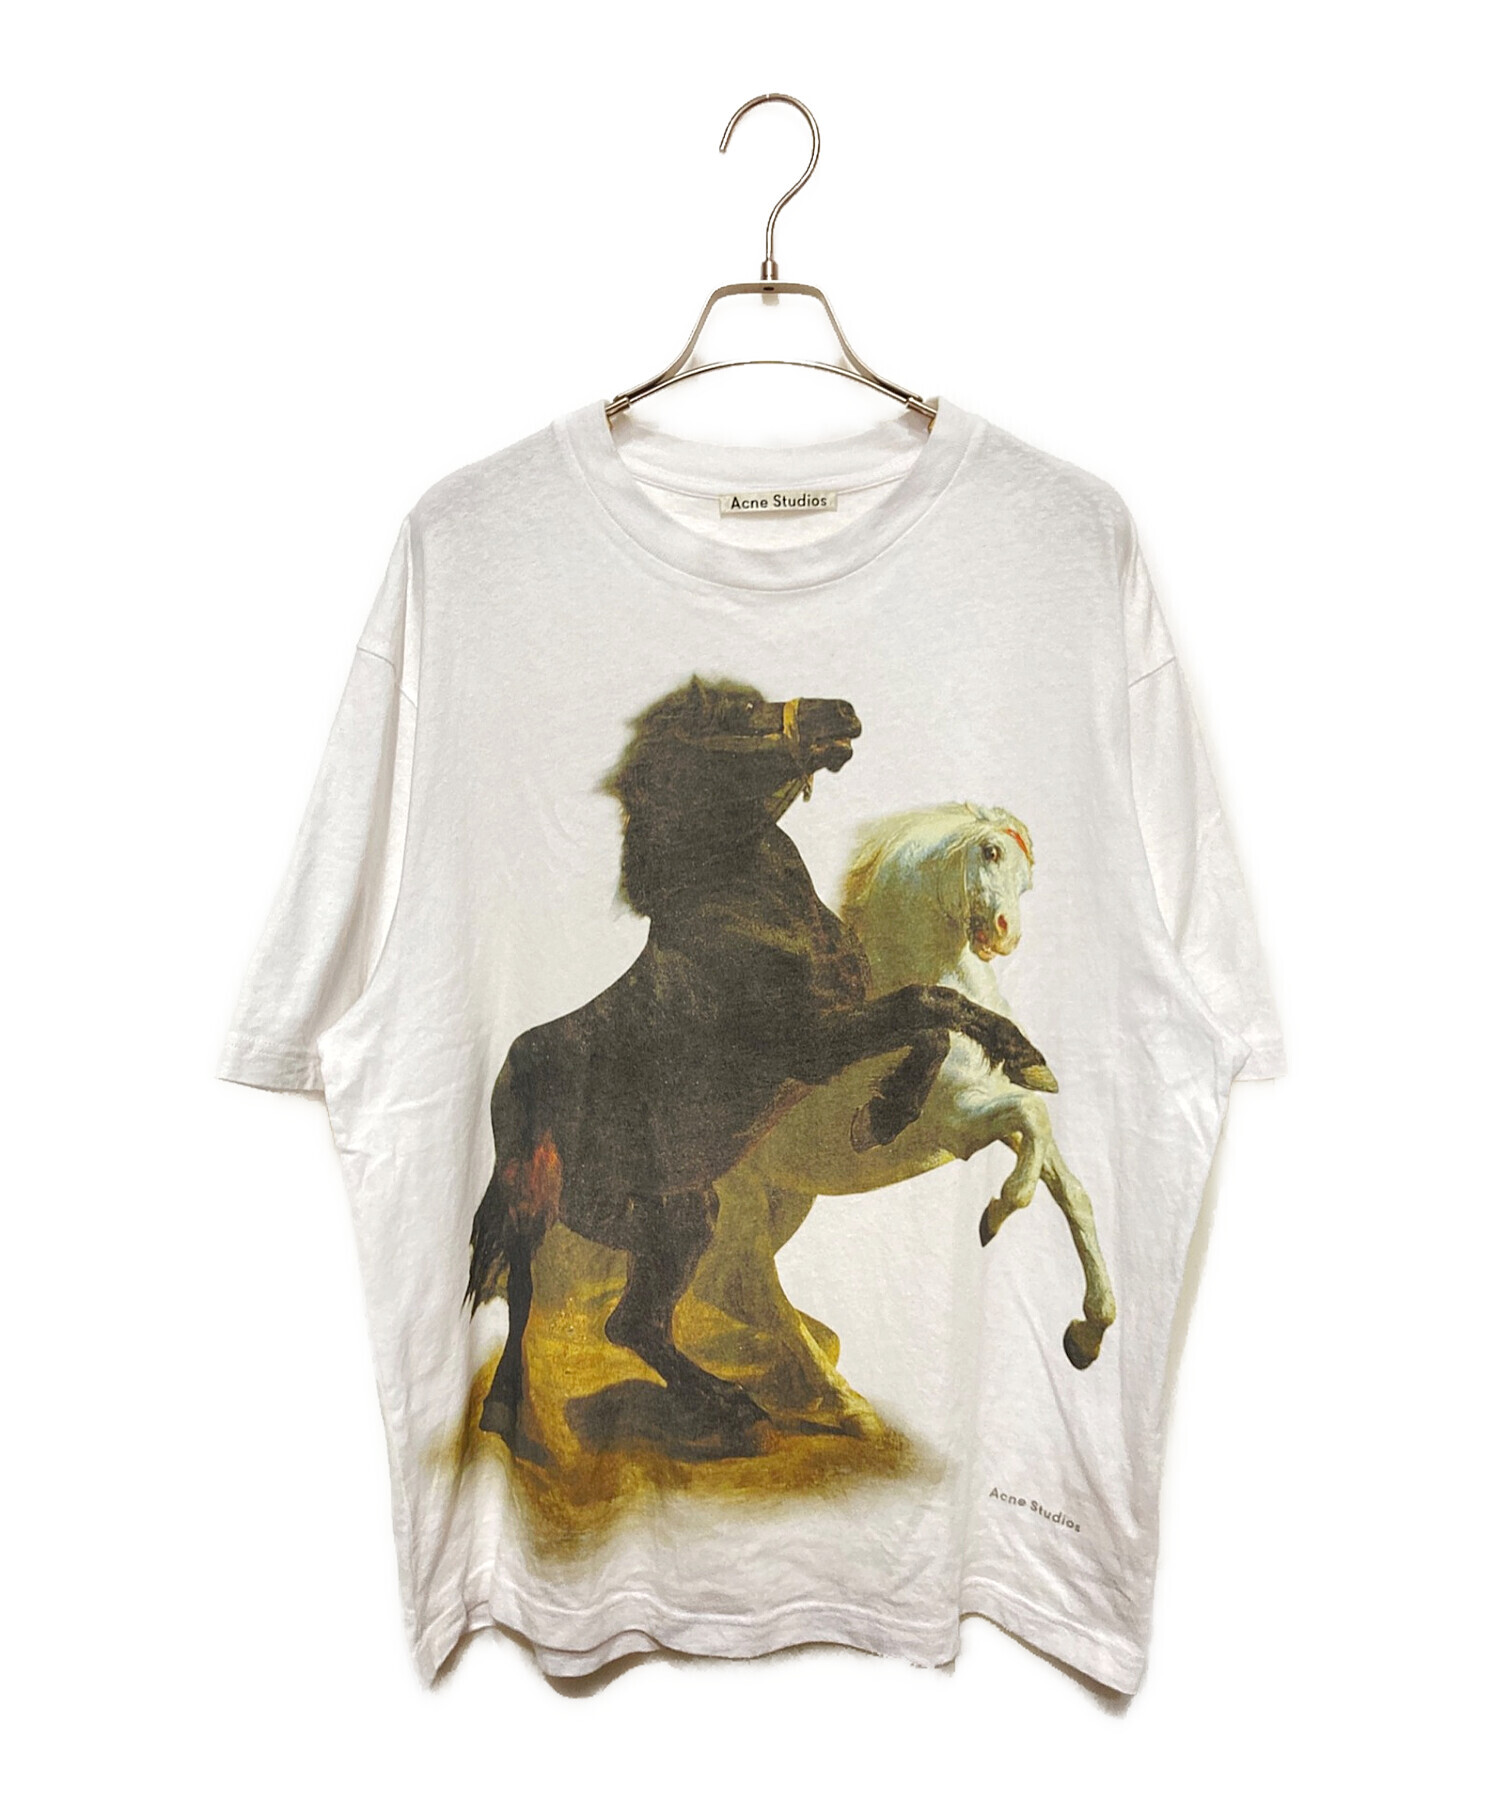 Acne studios (アクネストゥディオズ) HORSE PRINT T shirt ホワイト サイズ:s